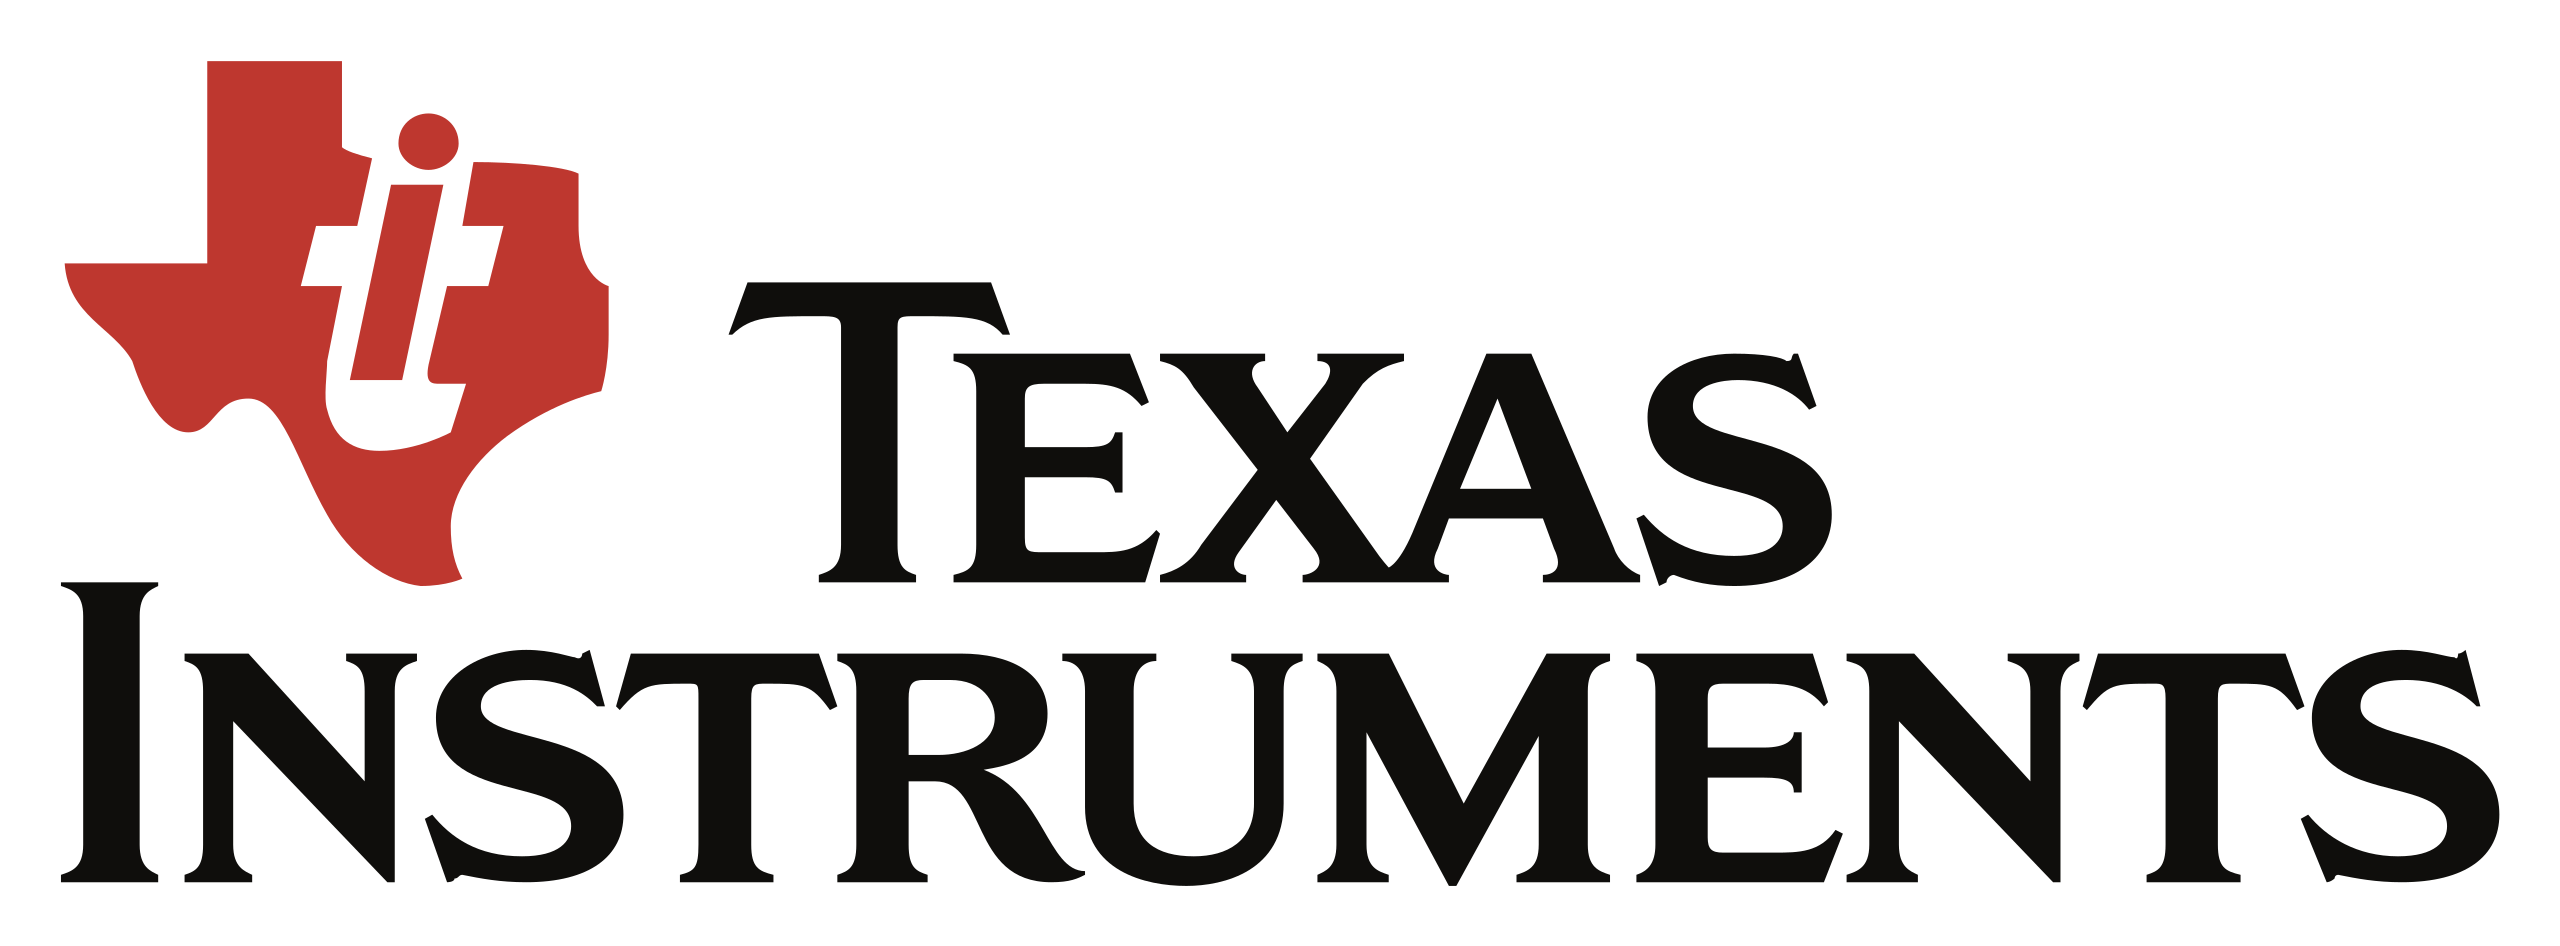 Texas Instruments Logo: Recognizable emblem of the Texas Instruements brand